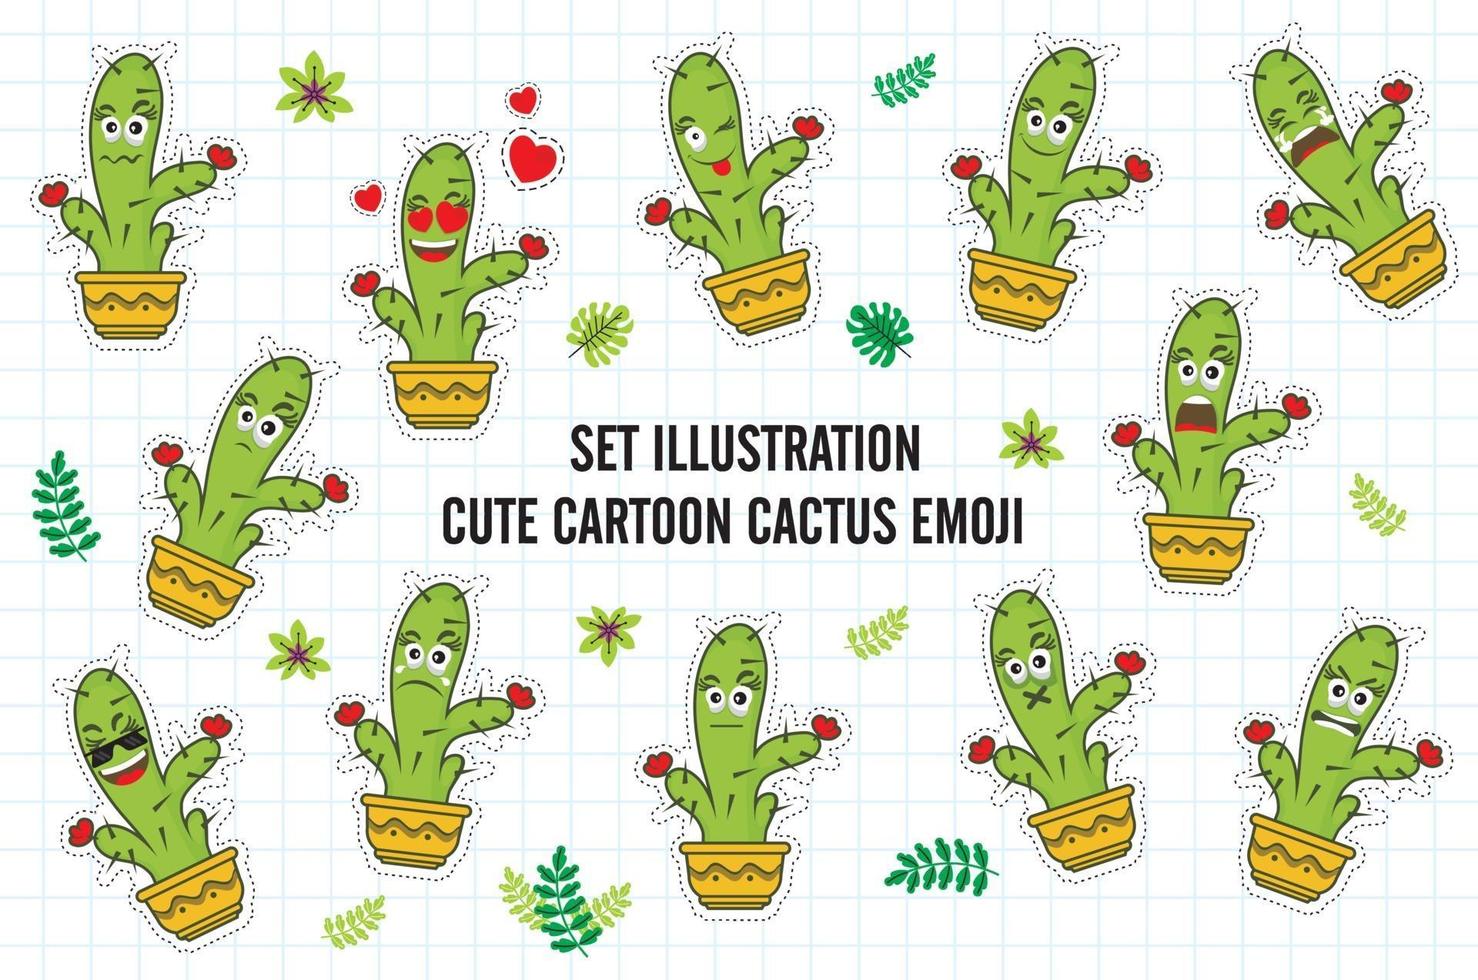 Set Illustration Cute Cartoon Cactus Emoji vector